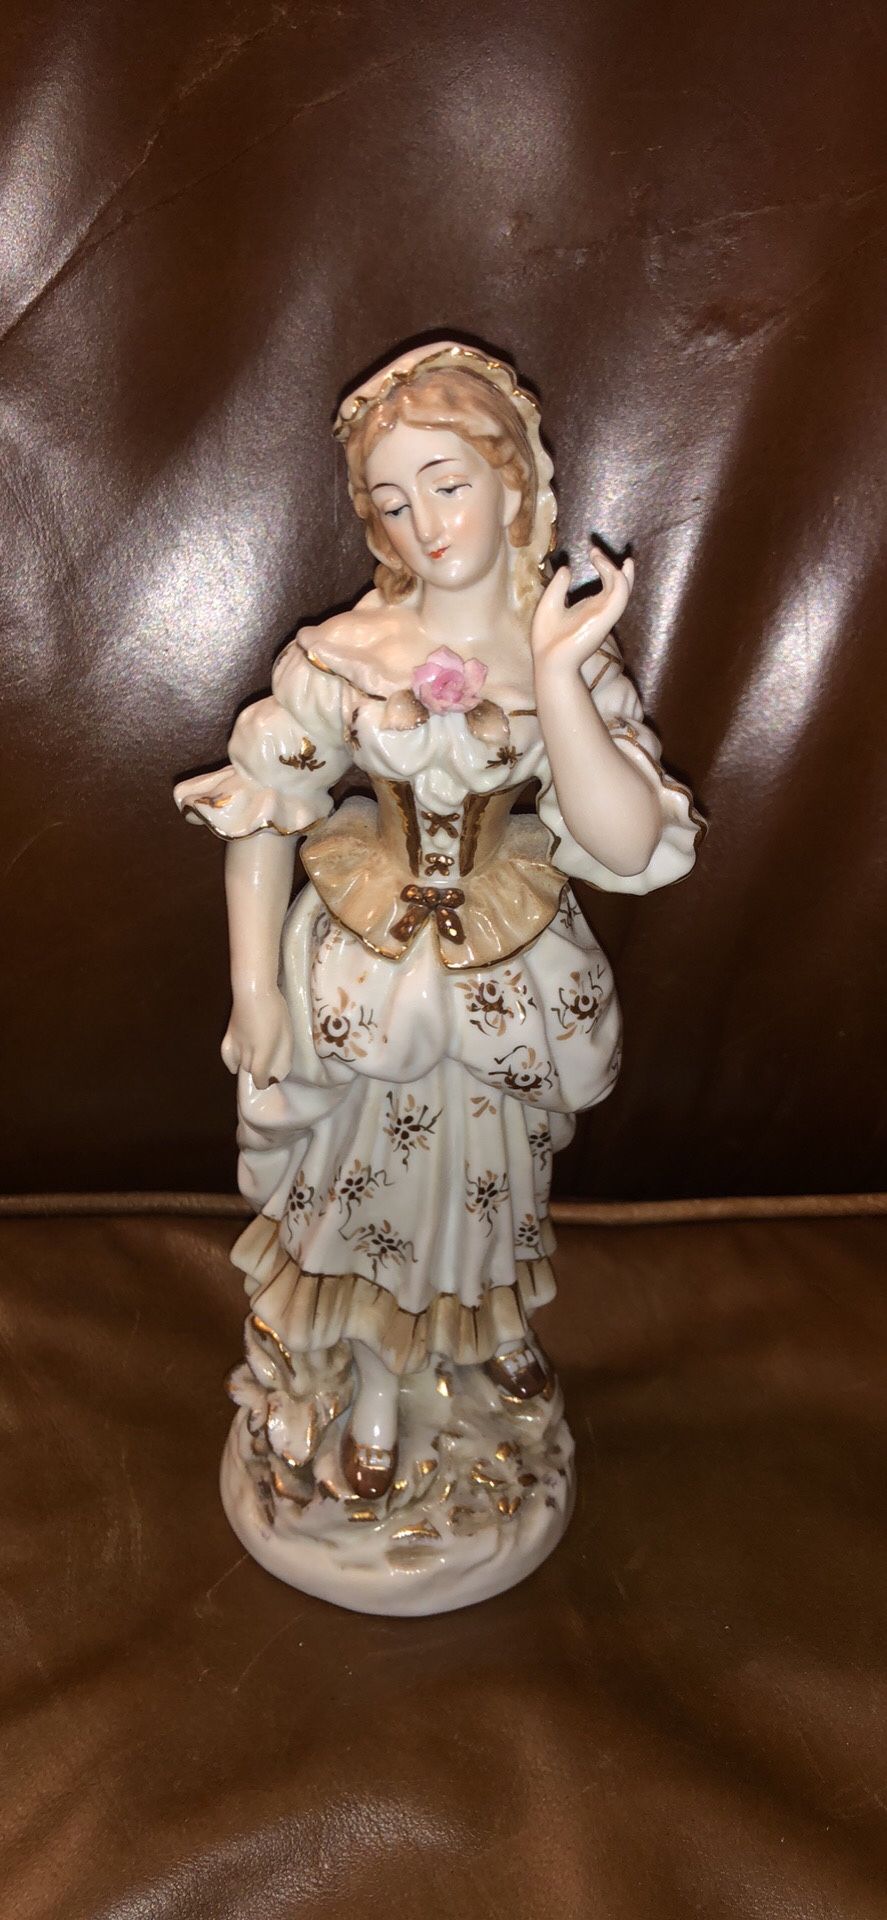 Pair of porcelain figurine